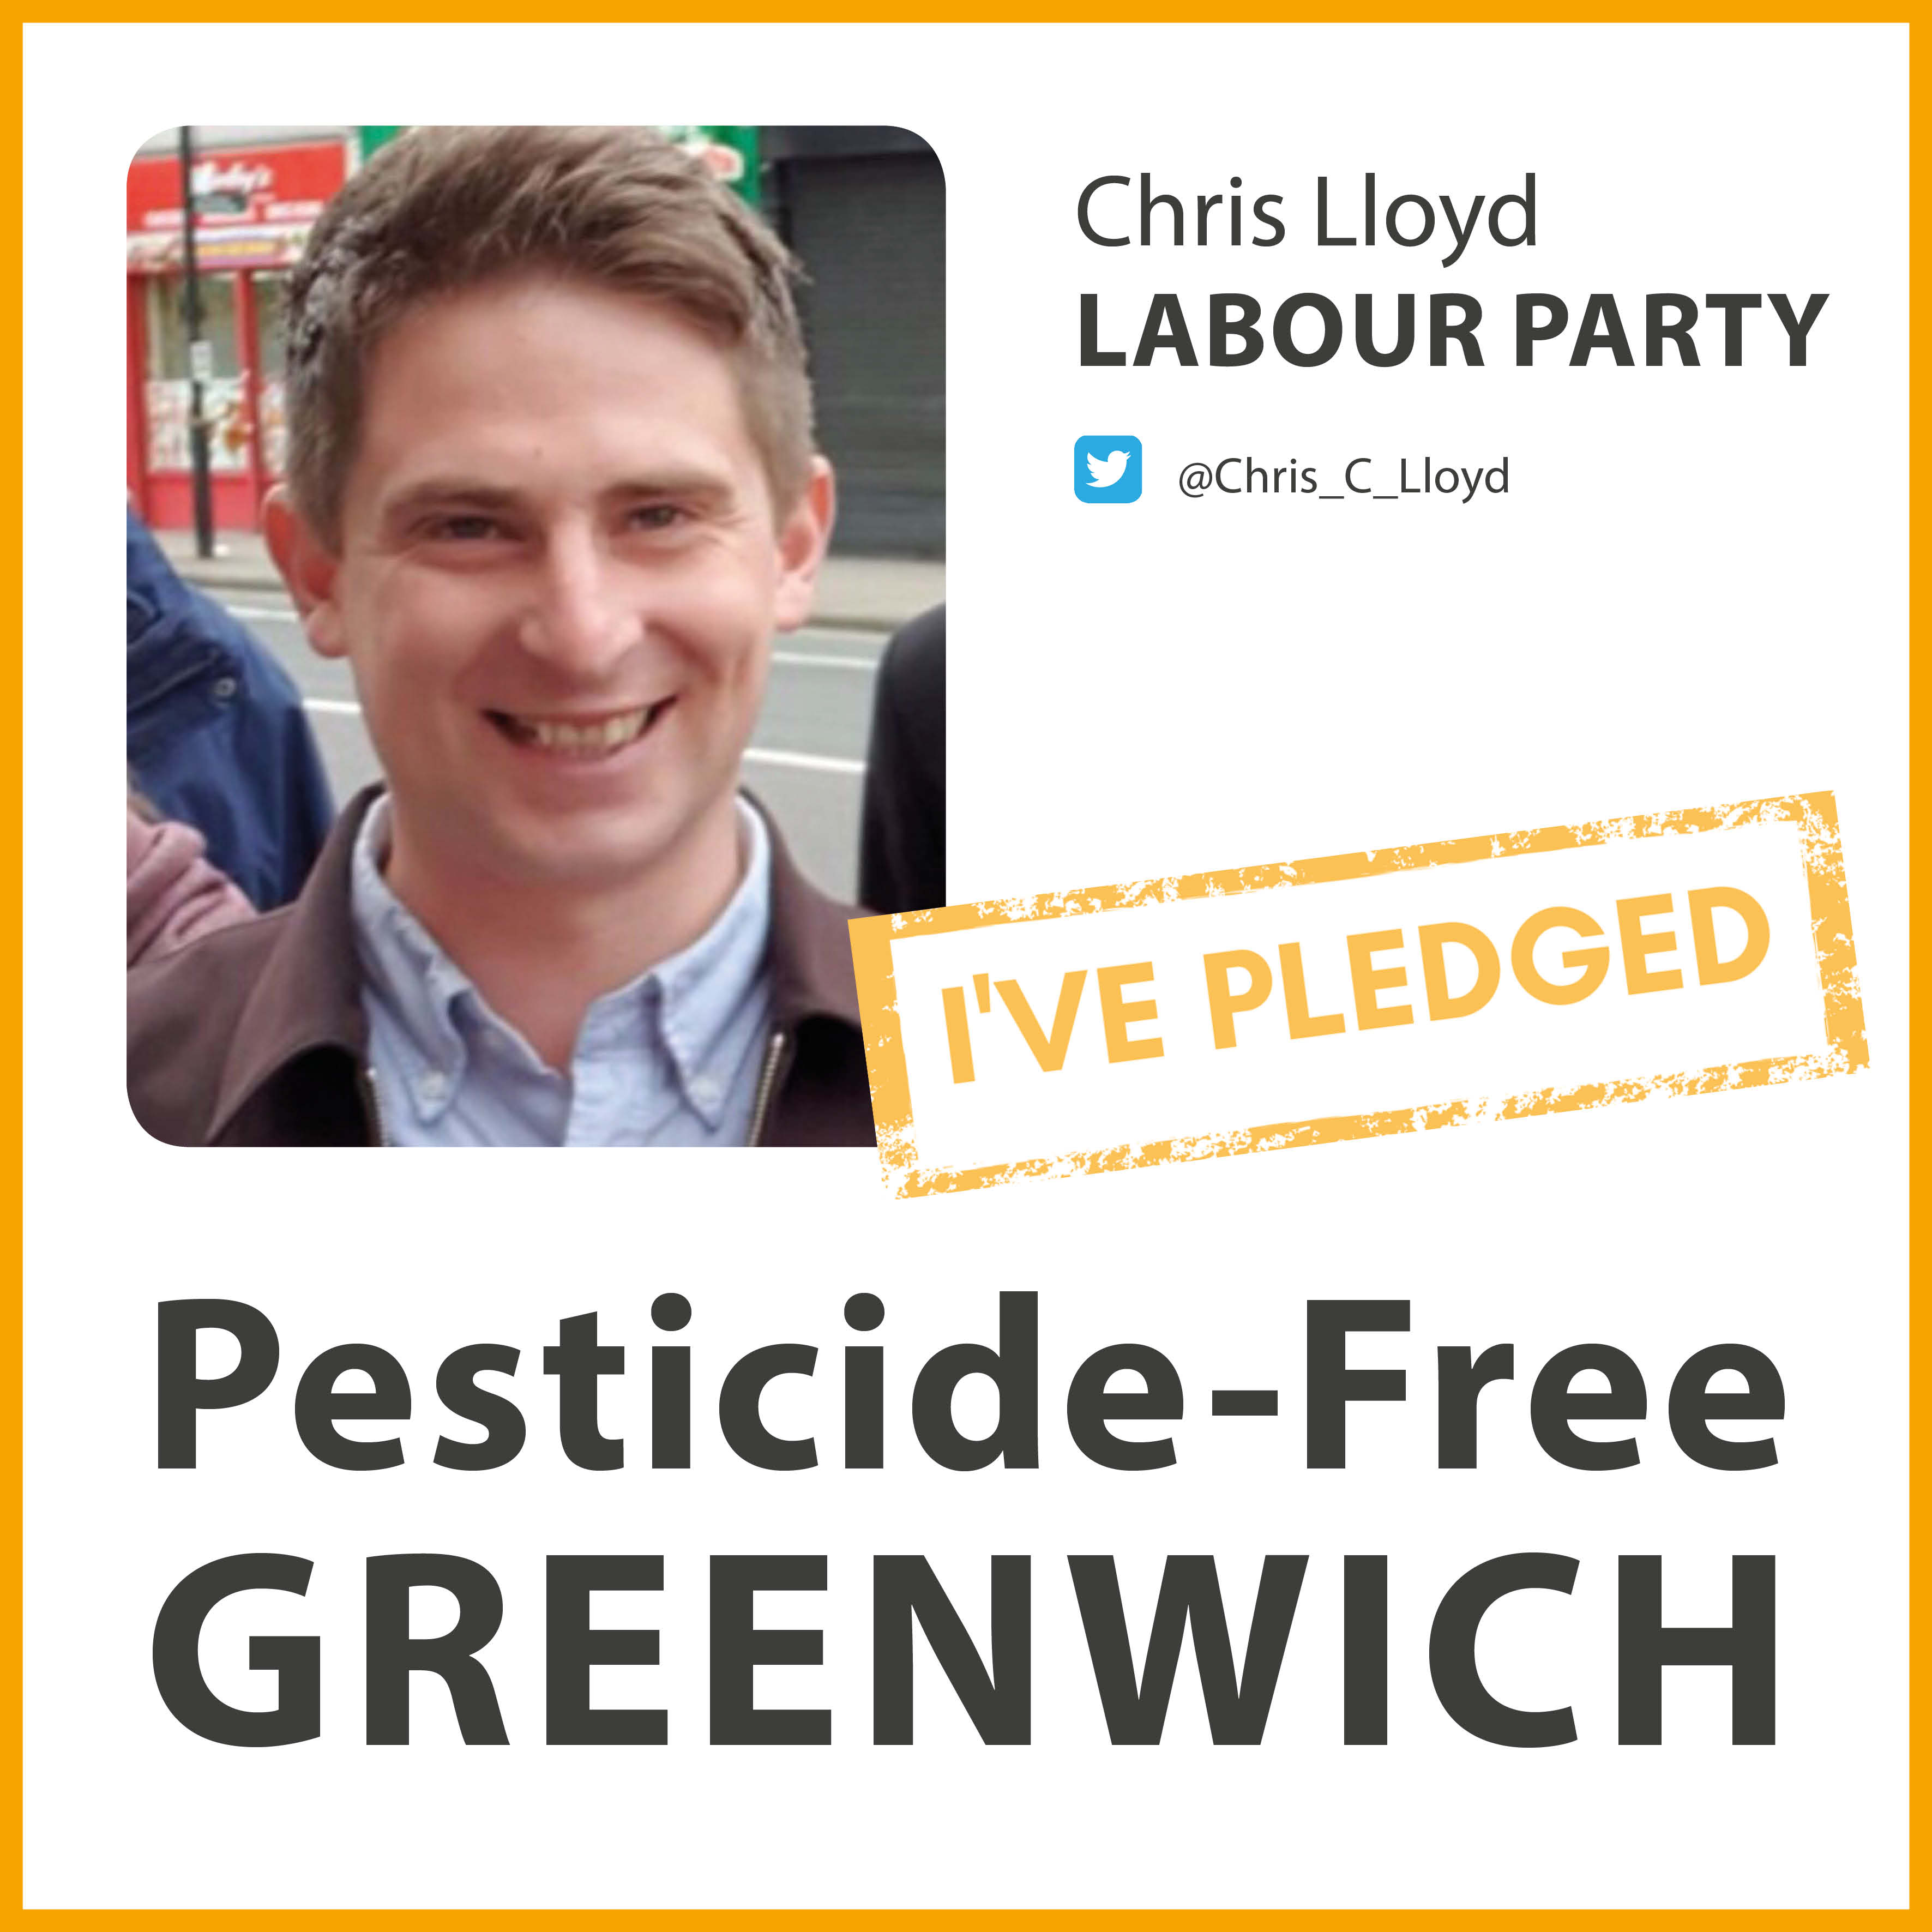 Chris Lloyd has taken the pesticide-free pledge in Greenwich